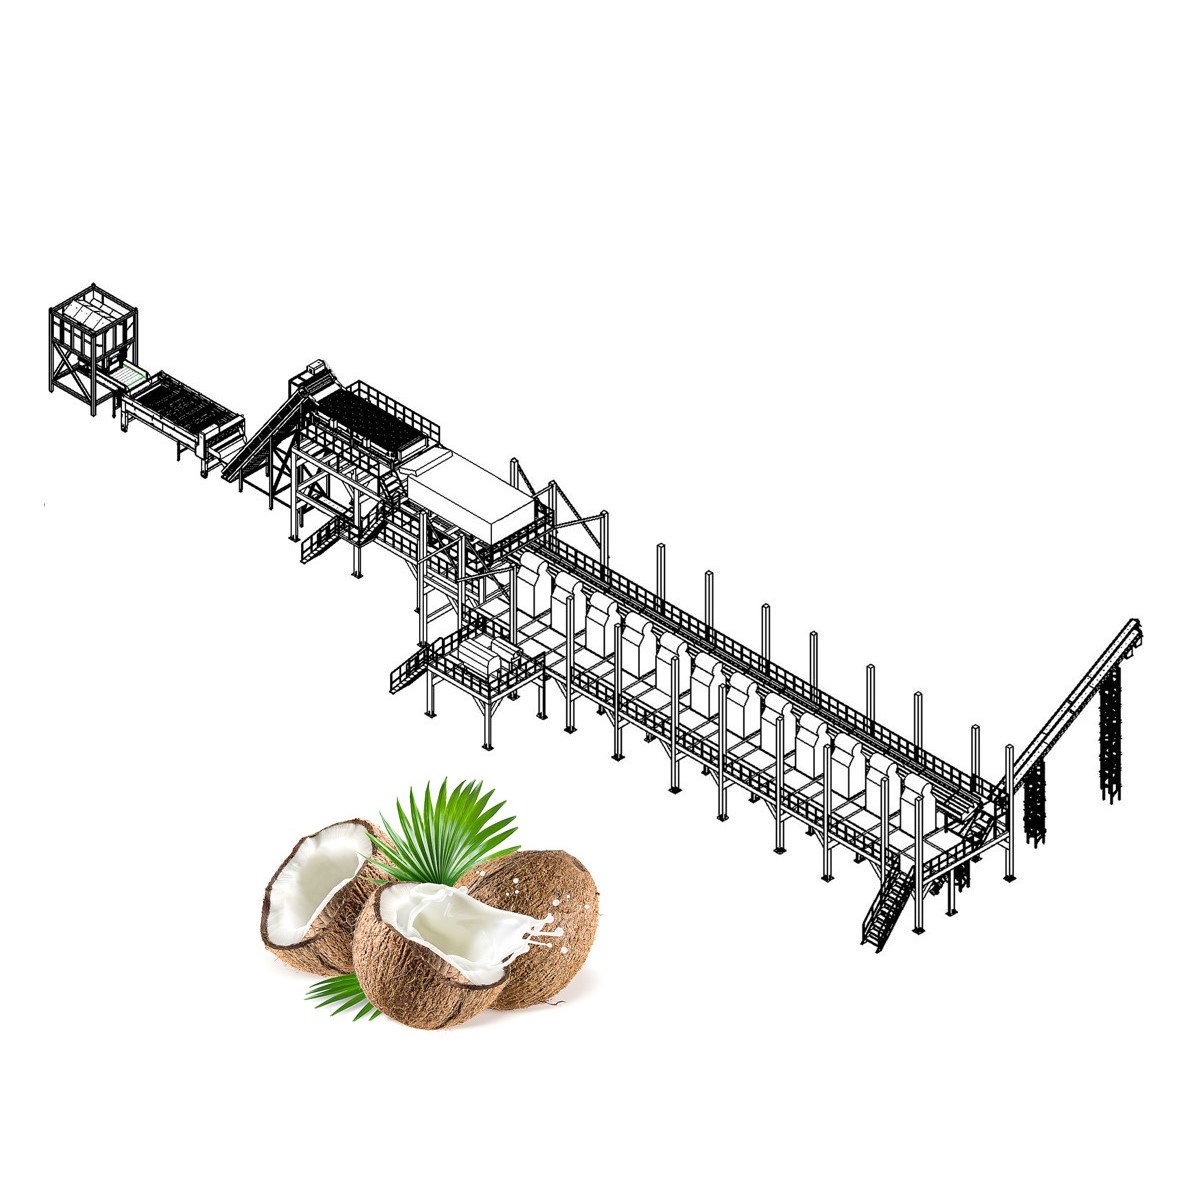 Coconut Processing Line